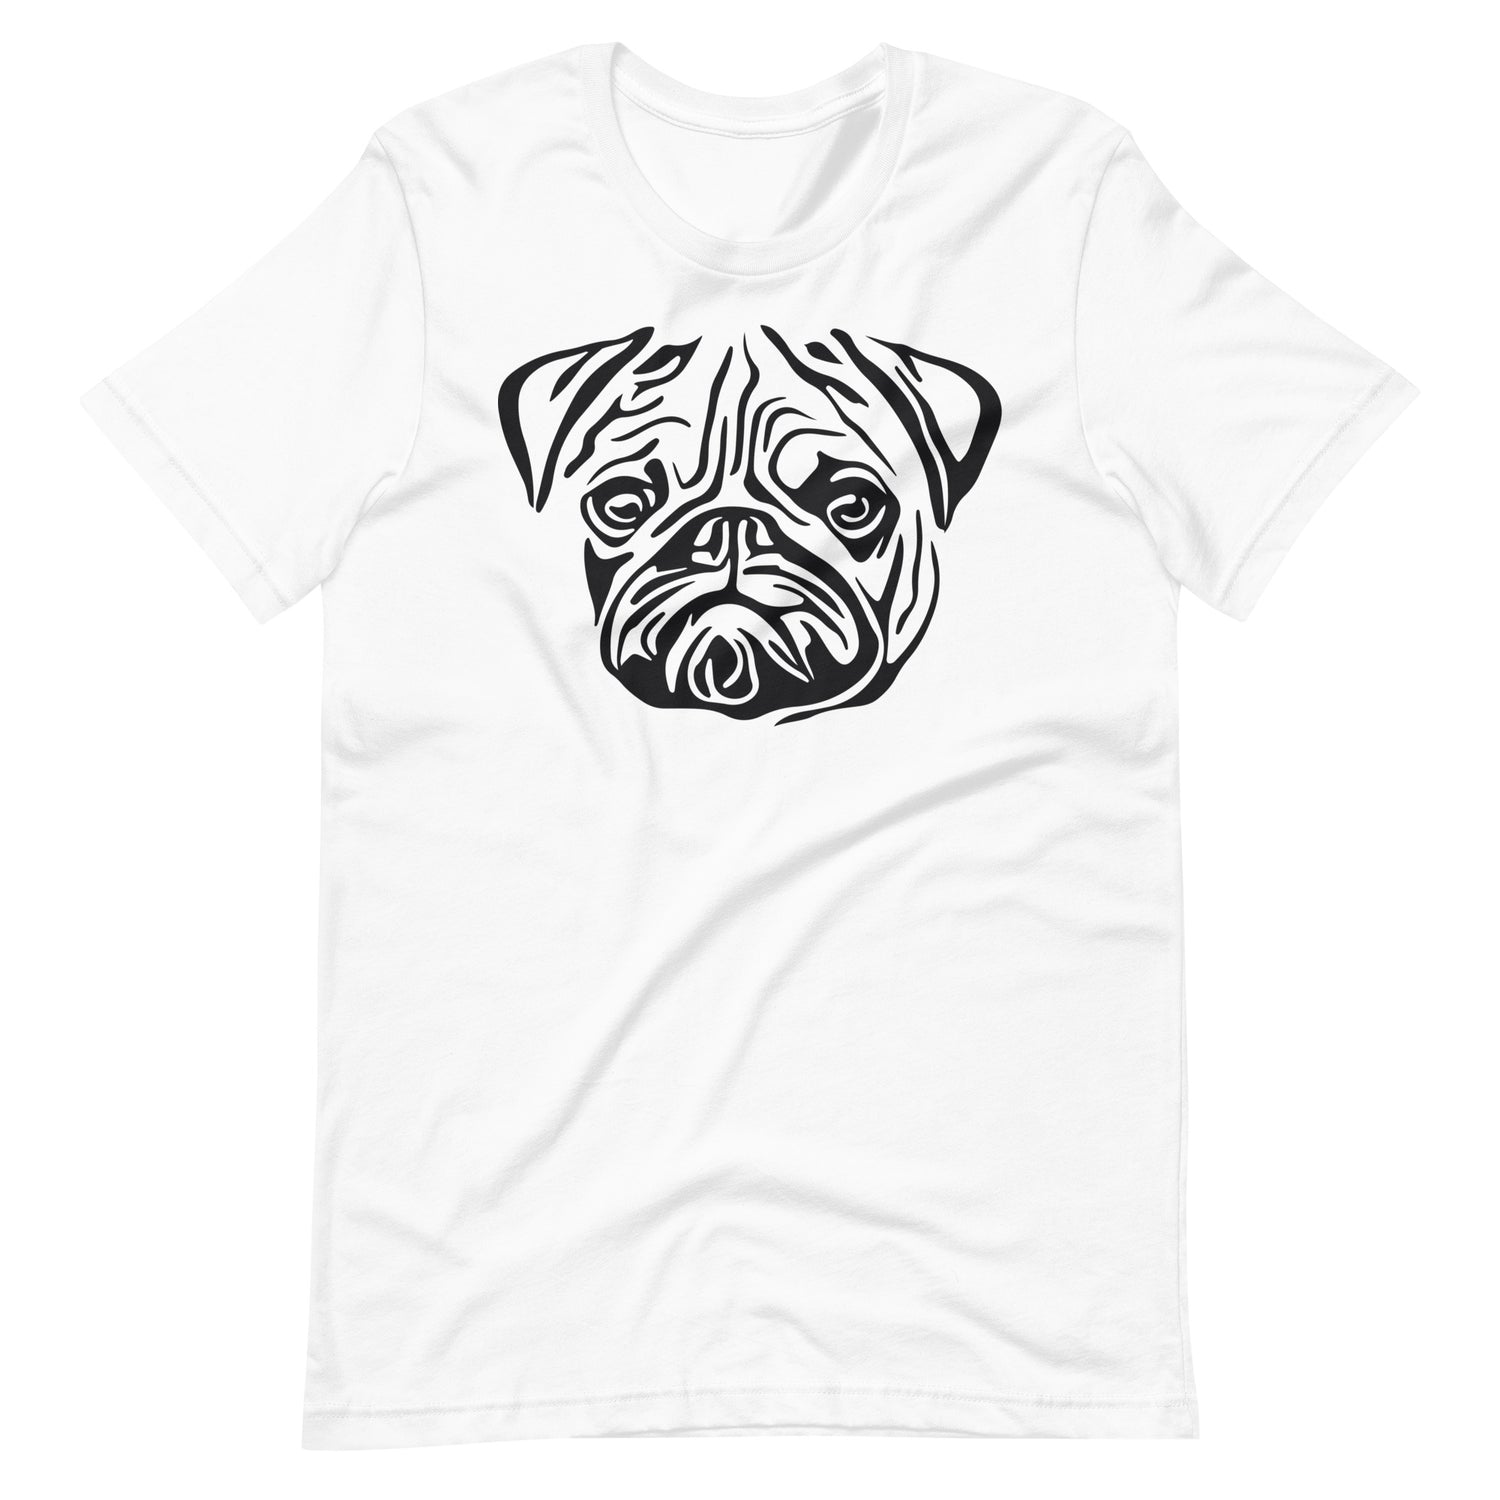 Black Pug face silhouette on unisex white t-shirt